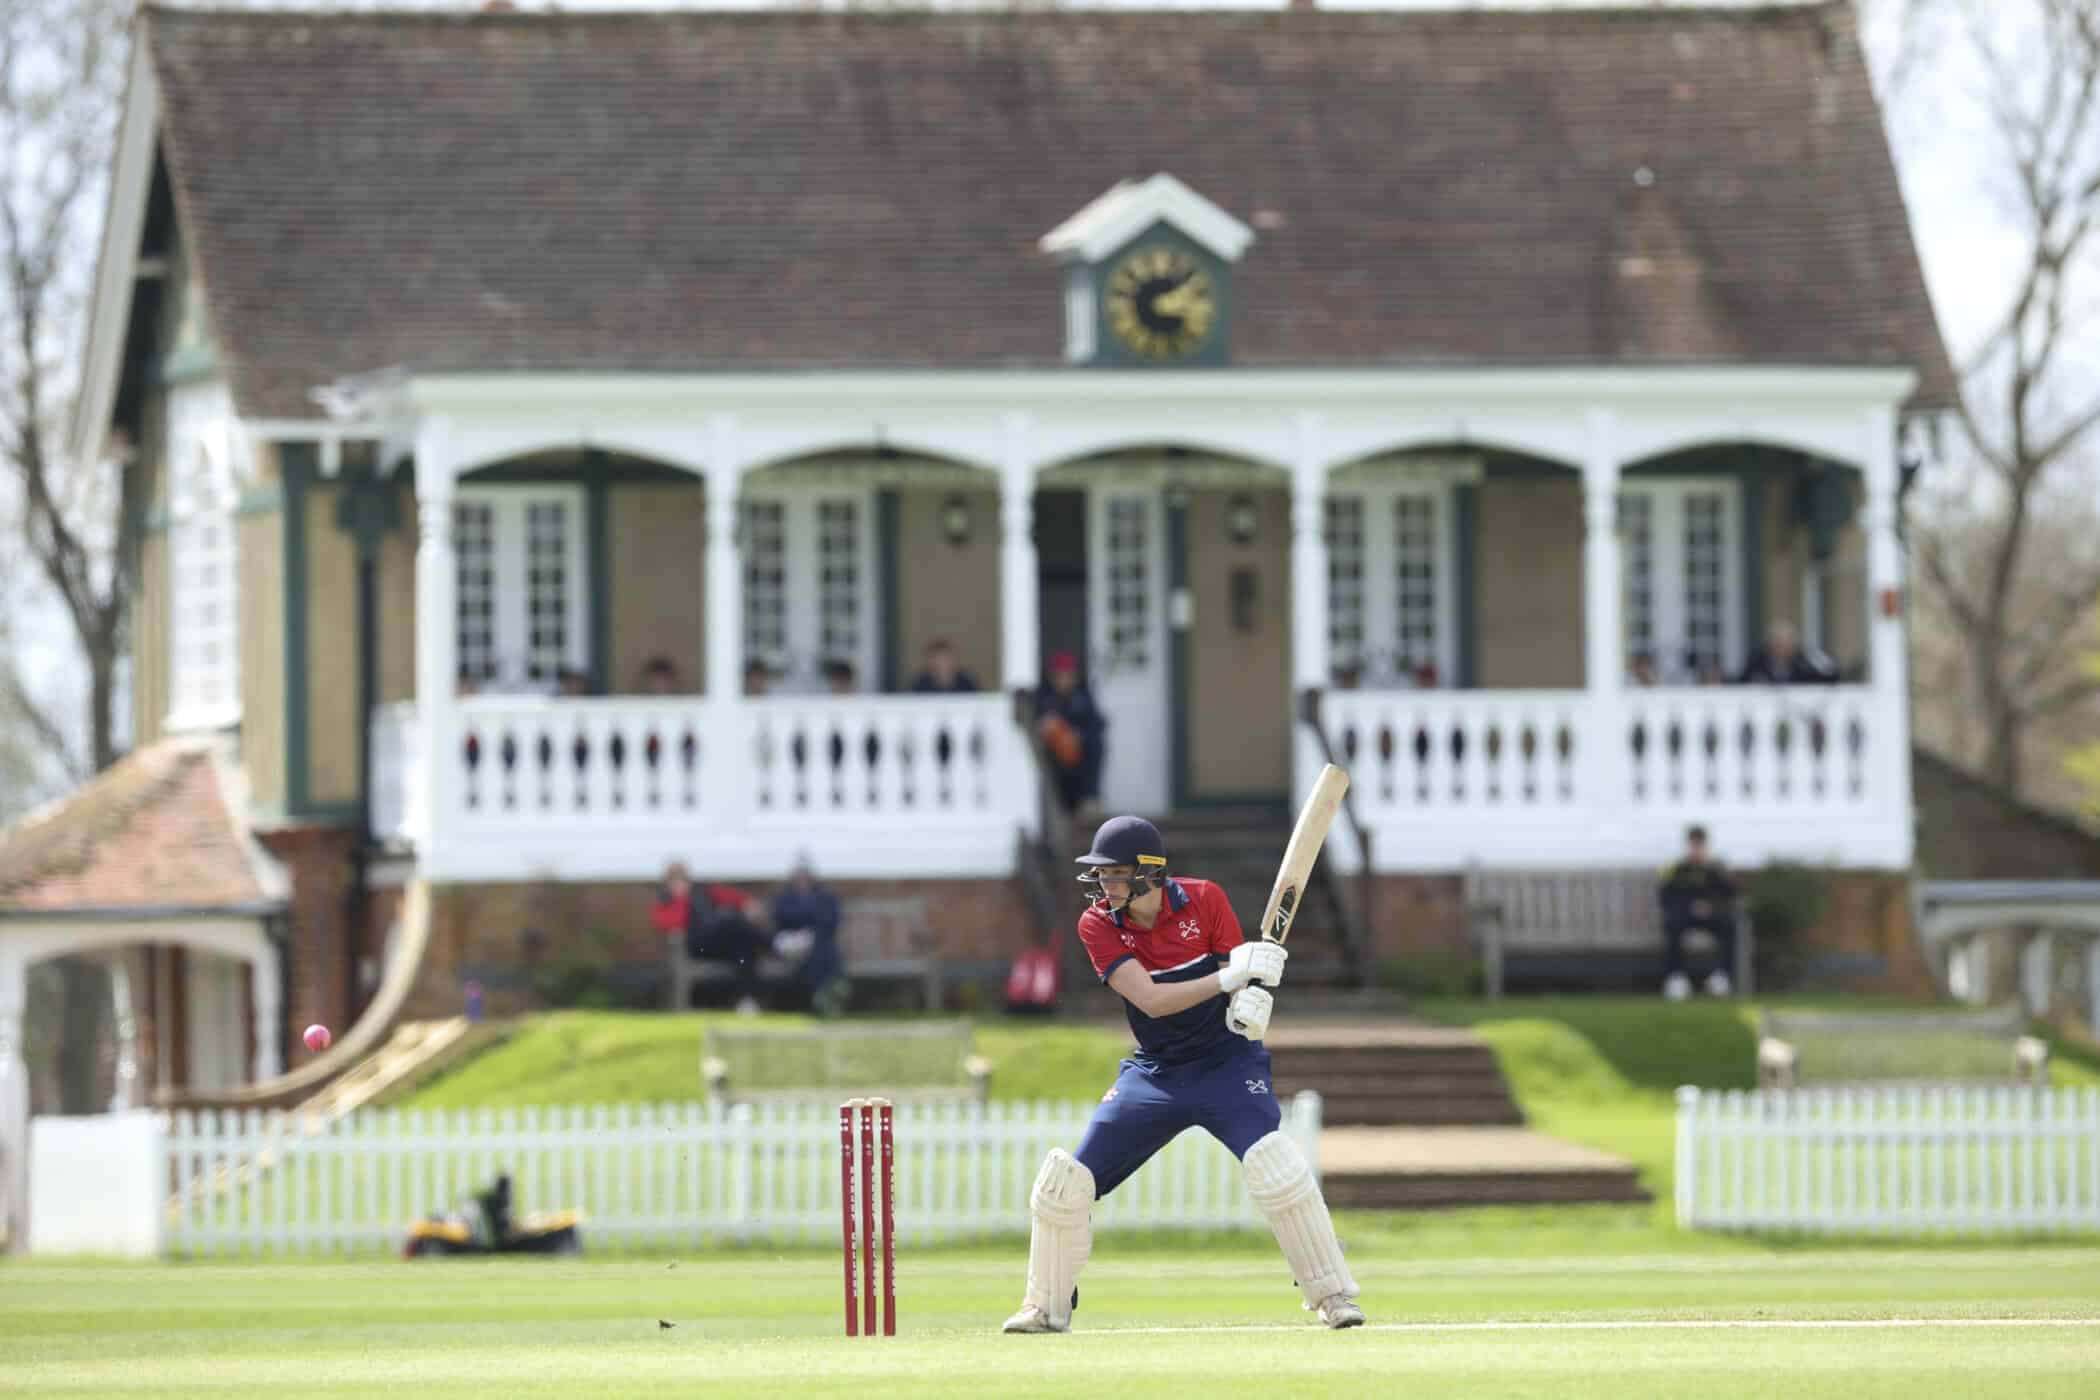 Cricket at Radley College